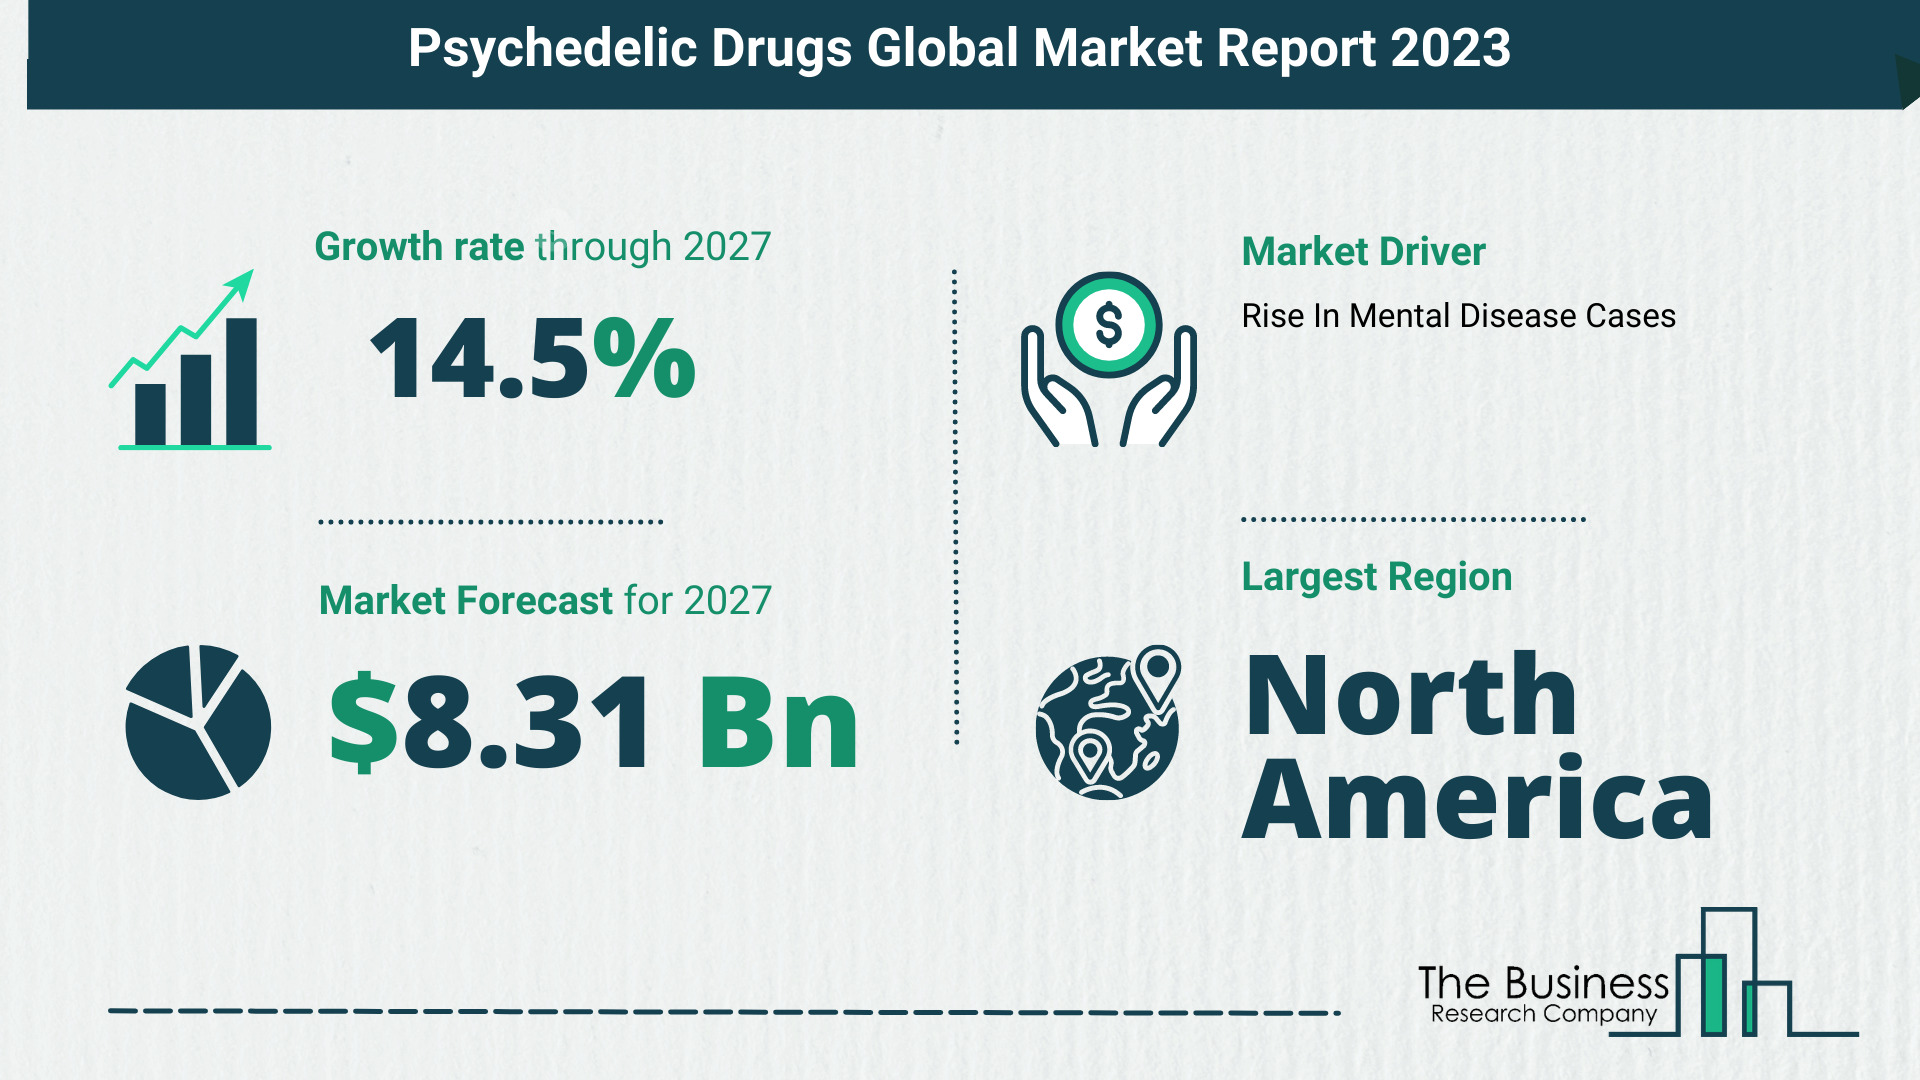 Global Psychedelic Drugs Market